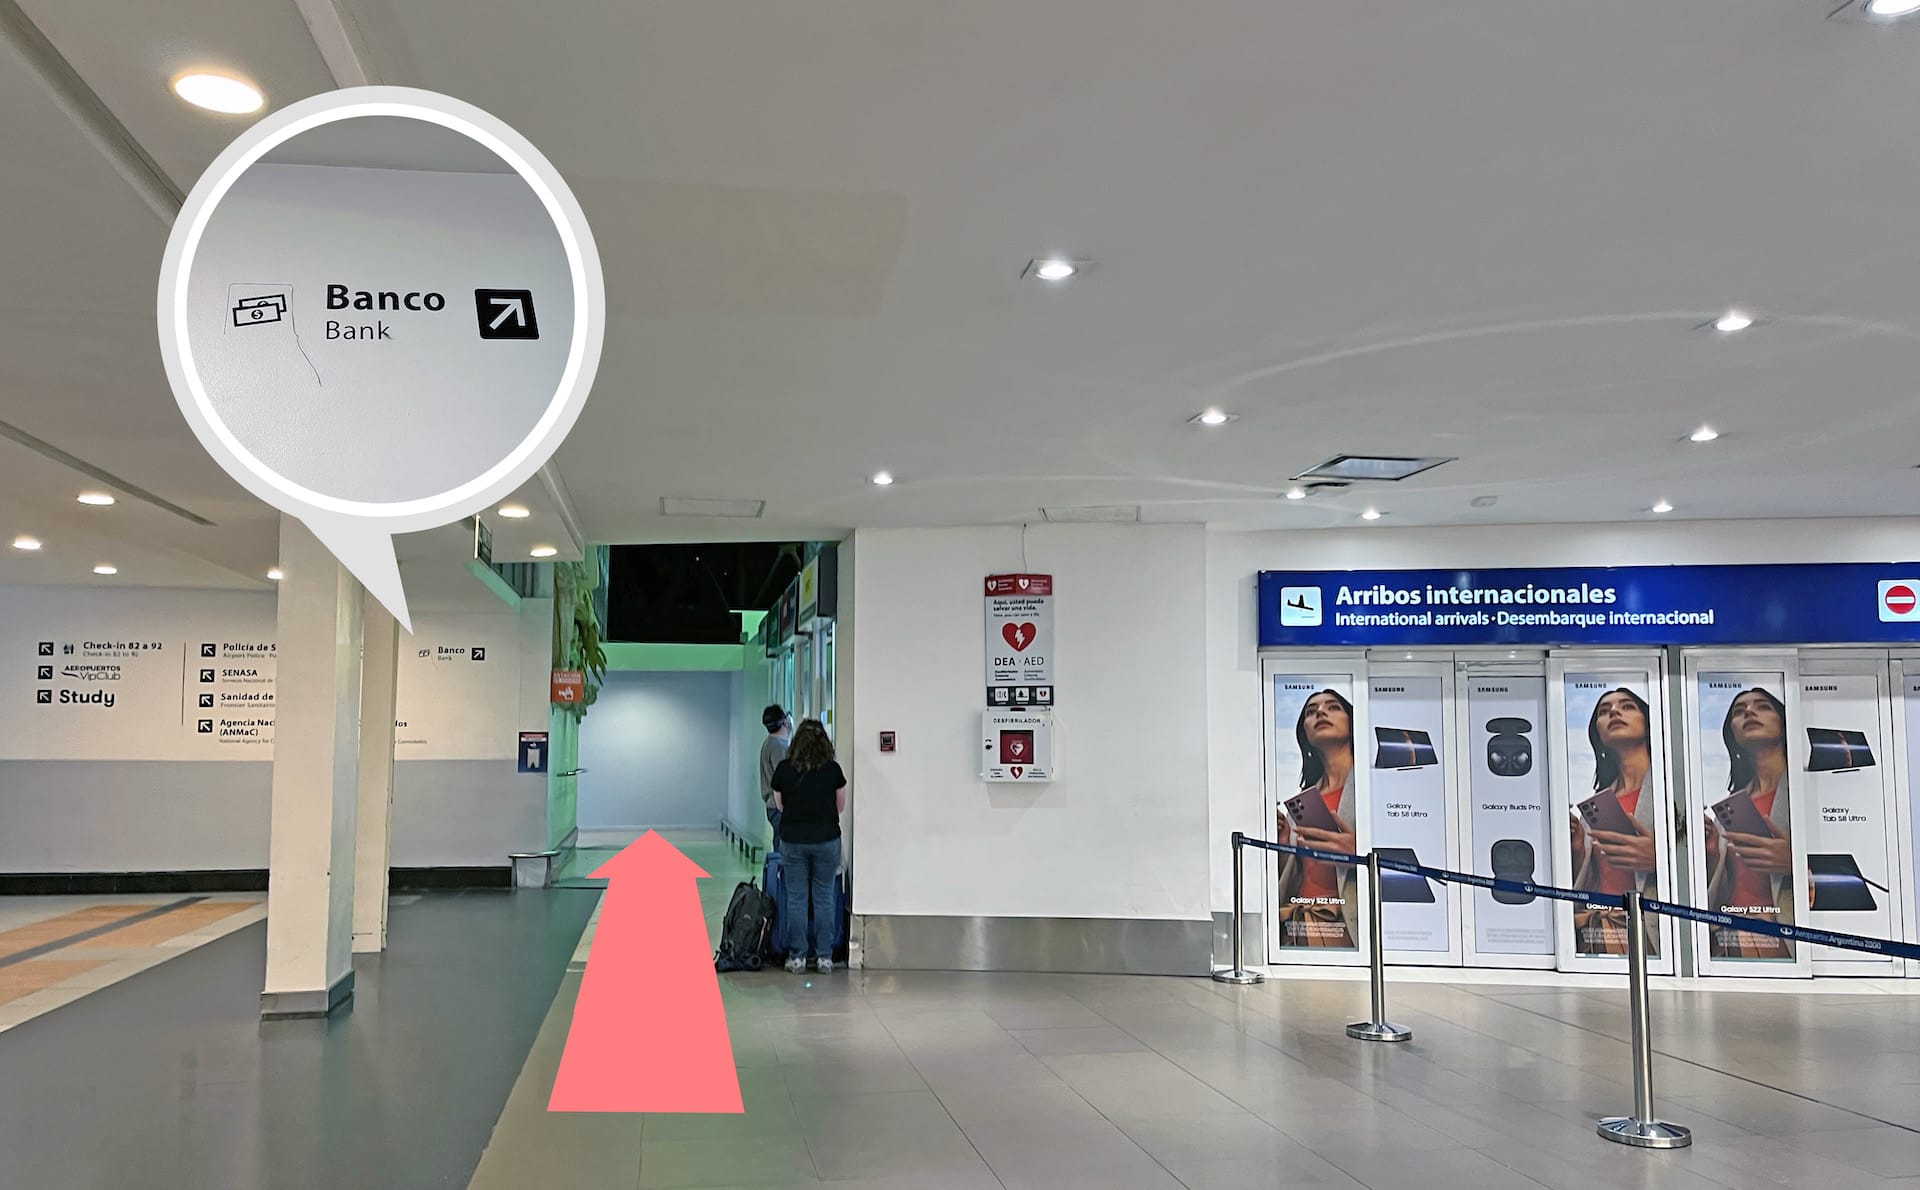 Entrance to Banco Nación in Ezeiza airport